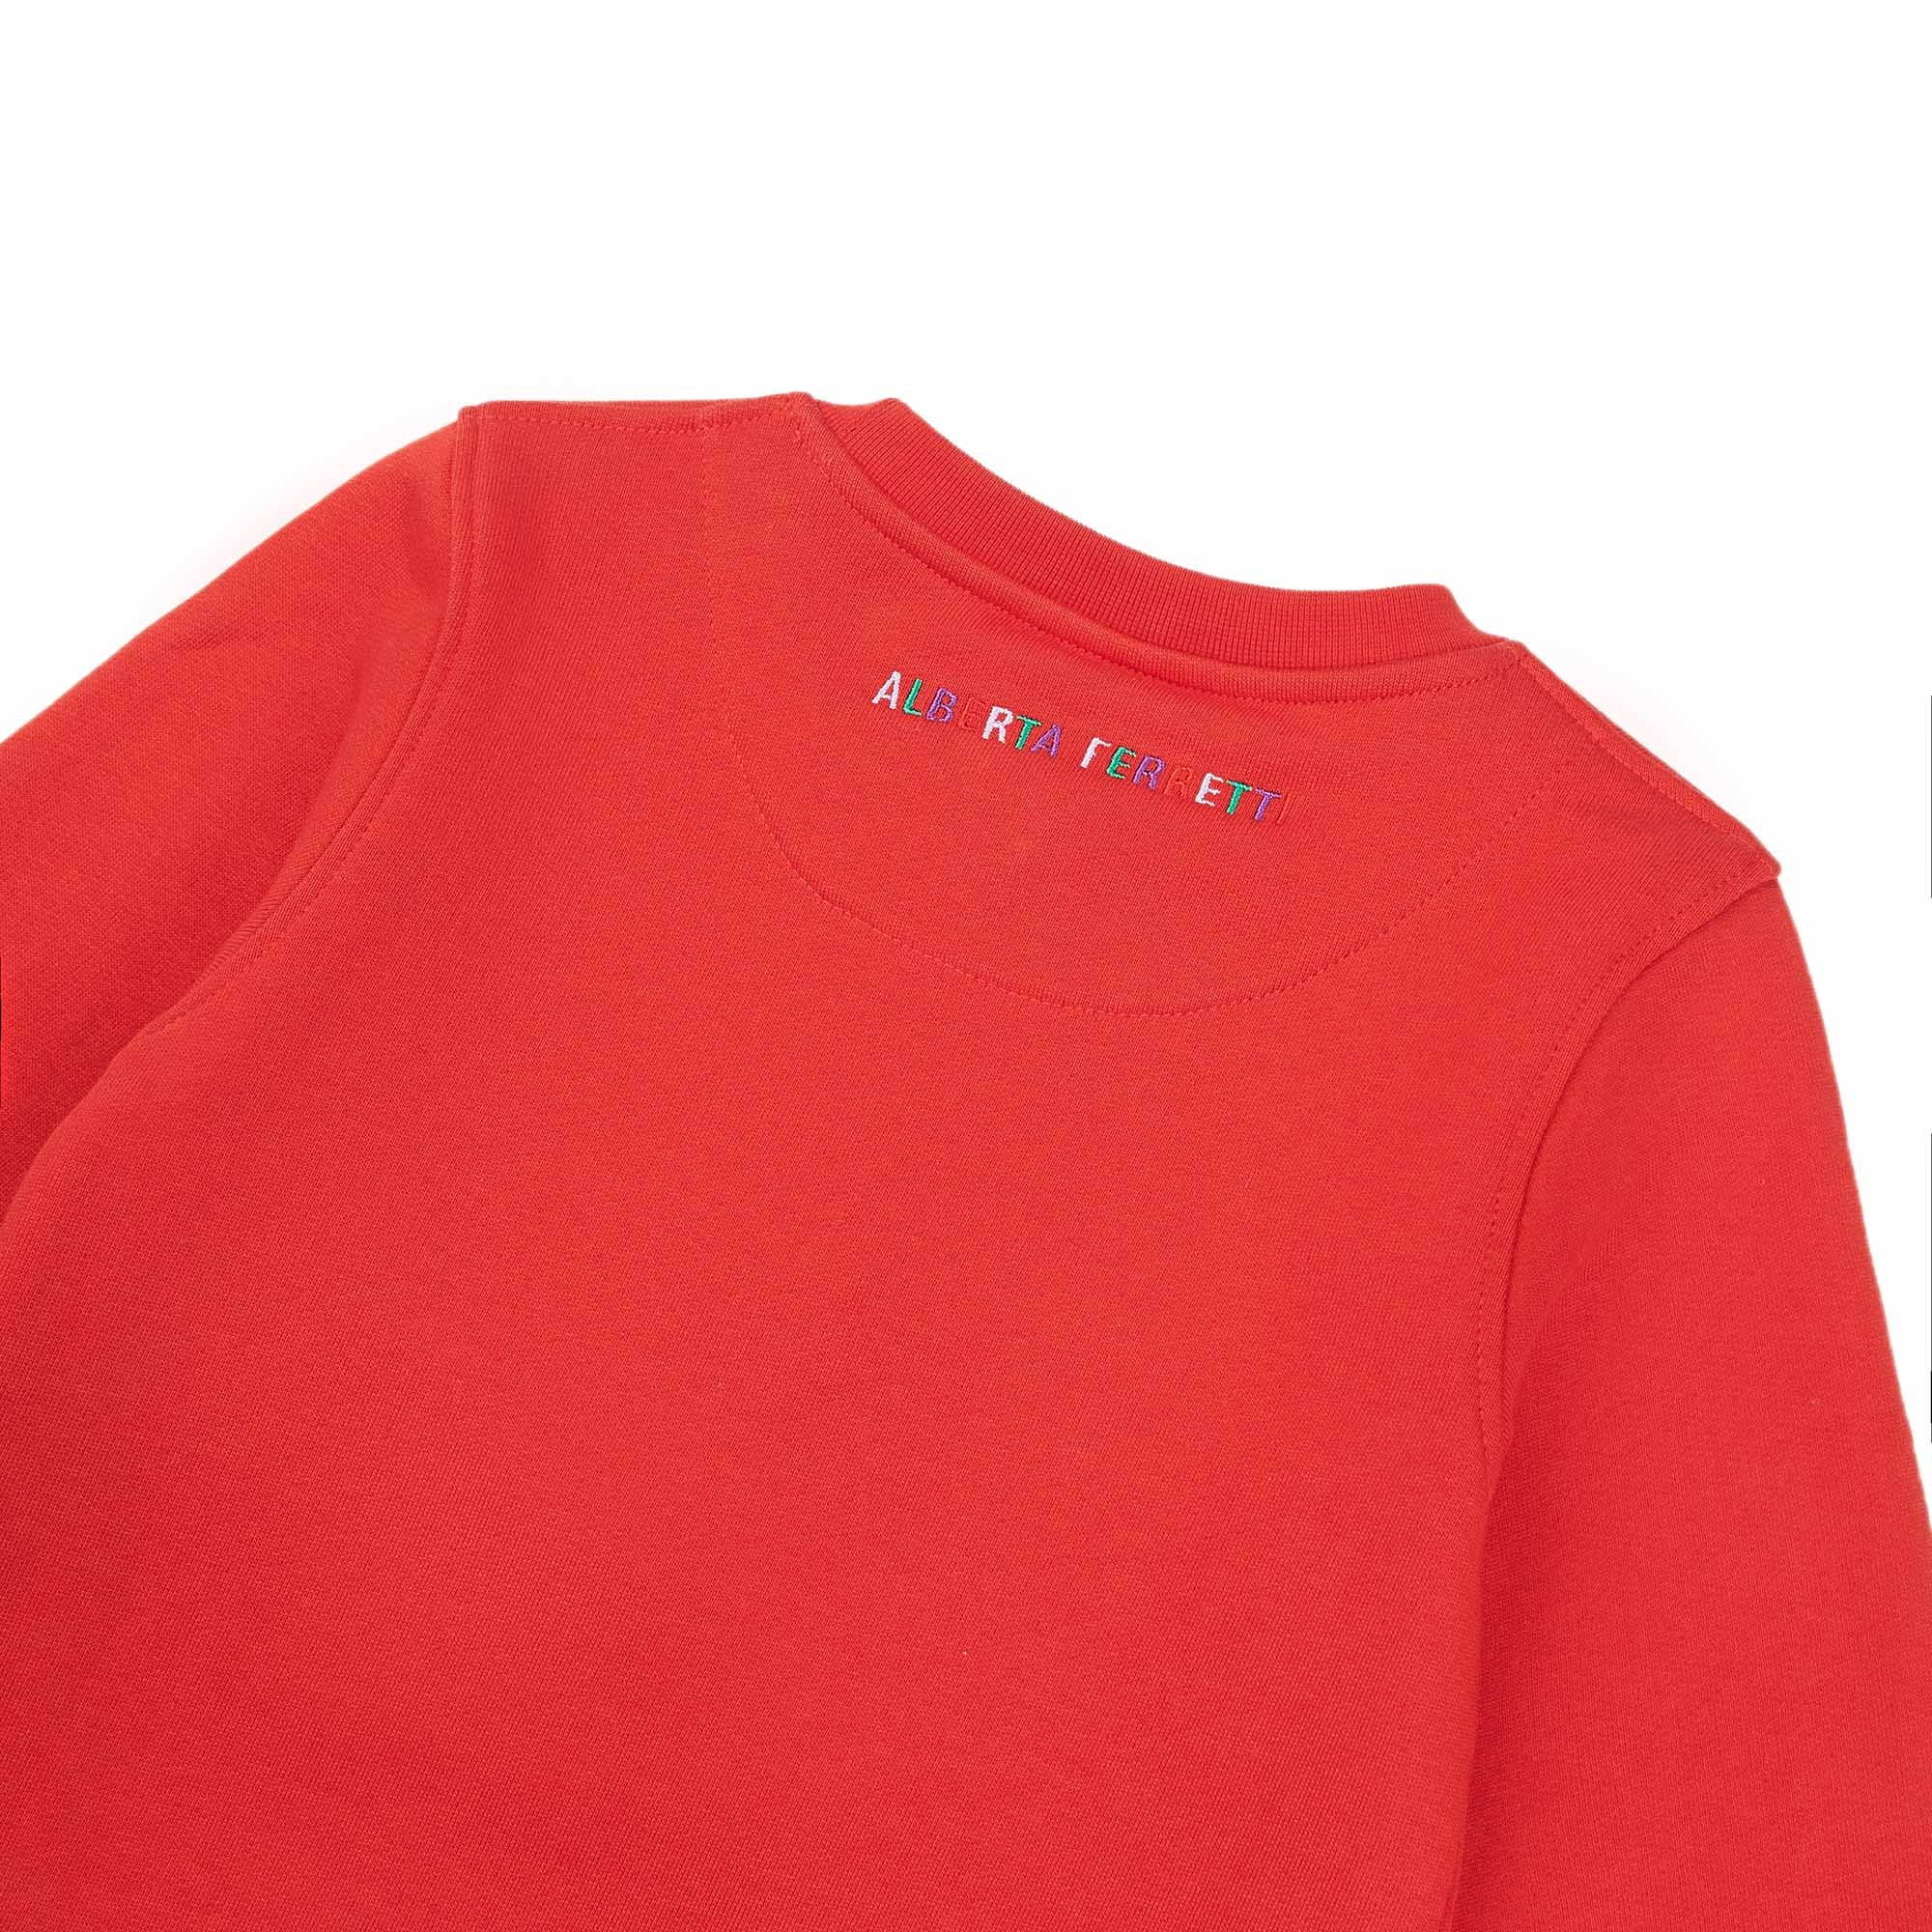 Girls Red Cotton Sweatshirt